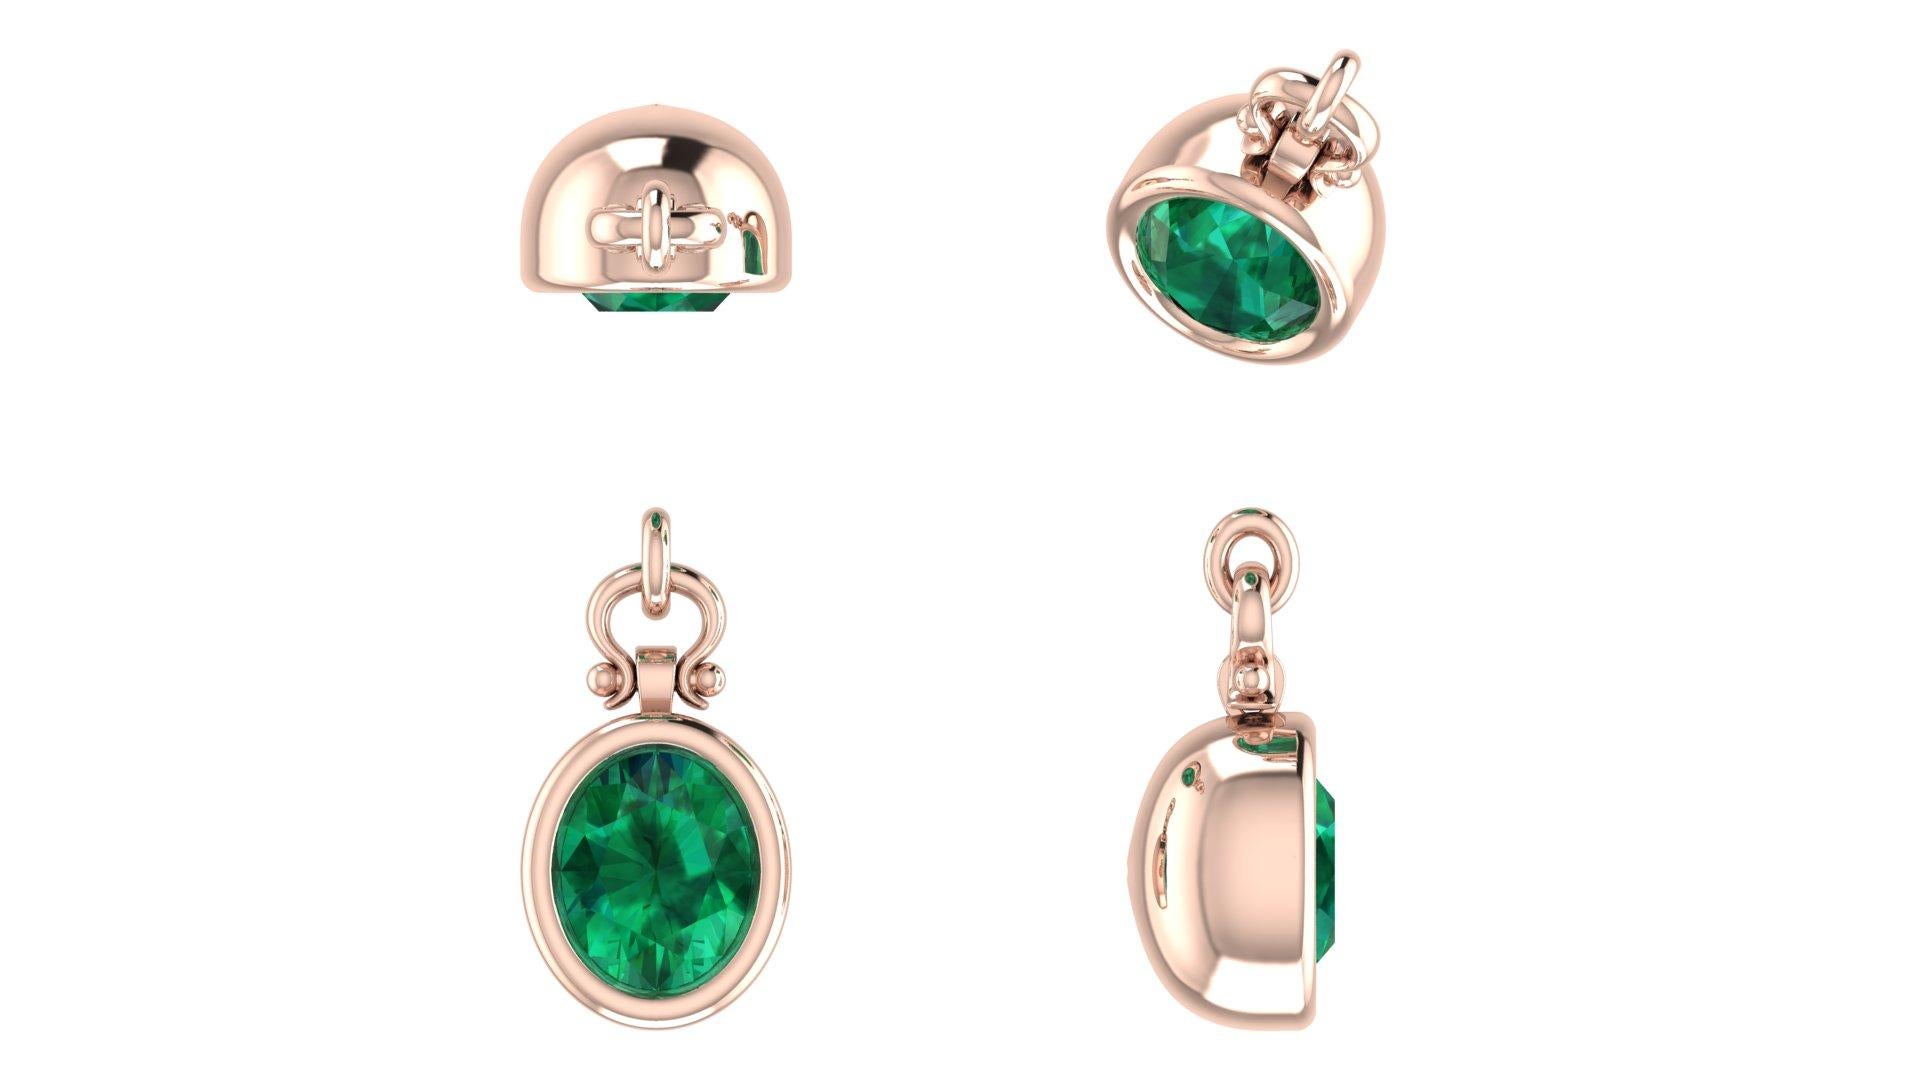 IGITL Certified 2.69 Carat Oval Cut Emerald Pendant Necklace in 18k For Sale 1